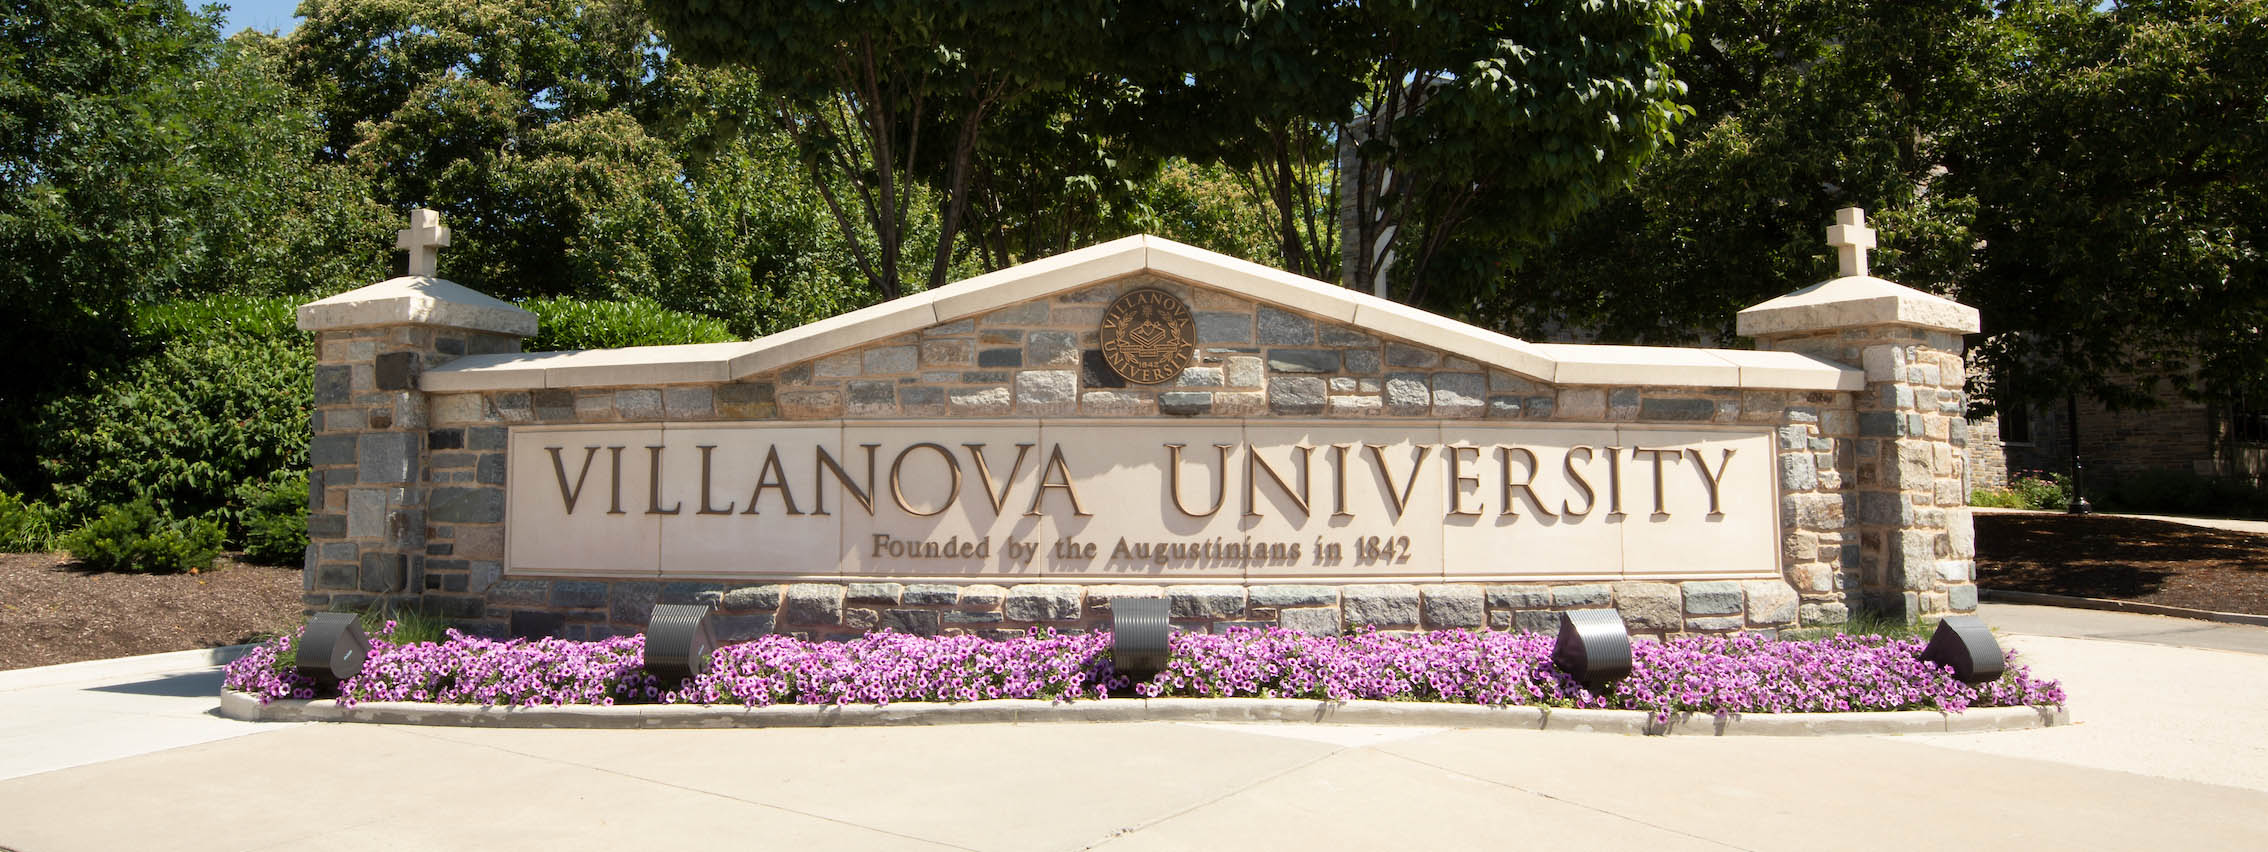 Villanova University entrance signage